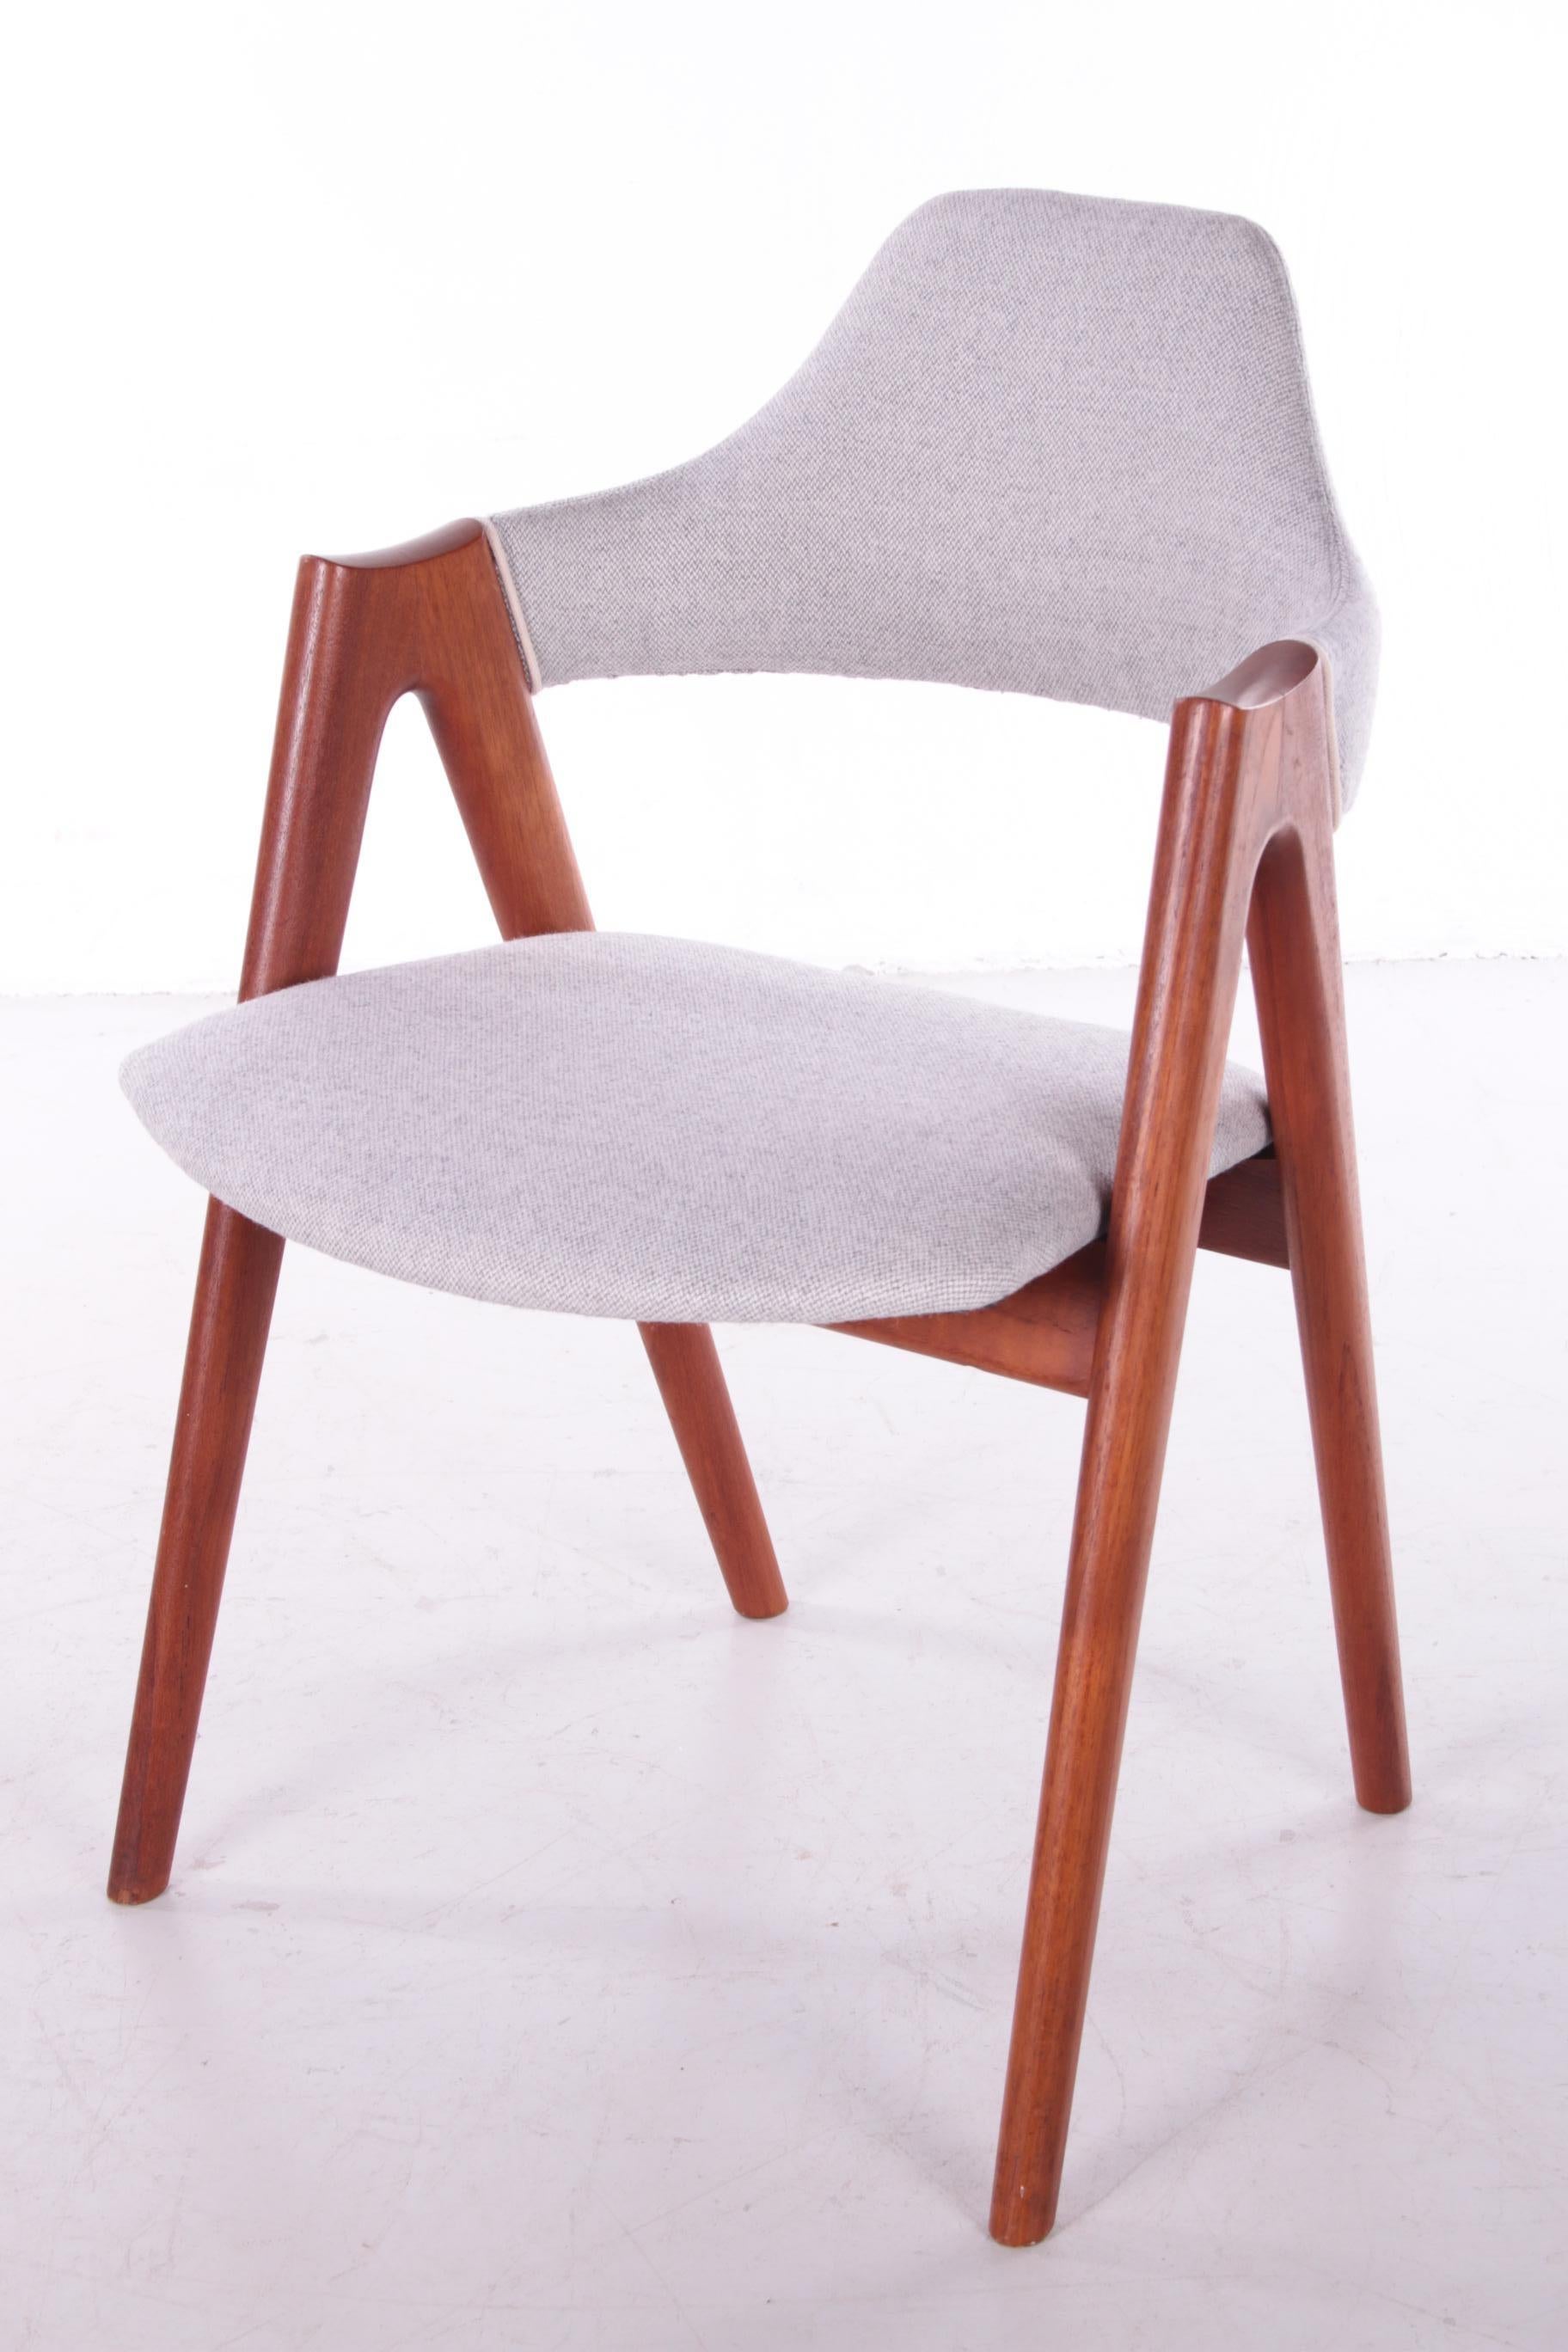 Set of 4 Danish Design Dining Table Chairs Model Compas Kai Kristiansen  1